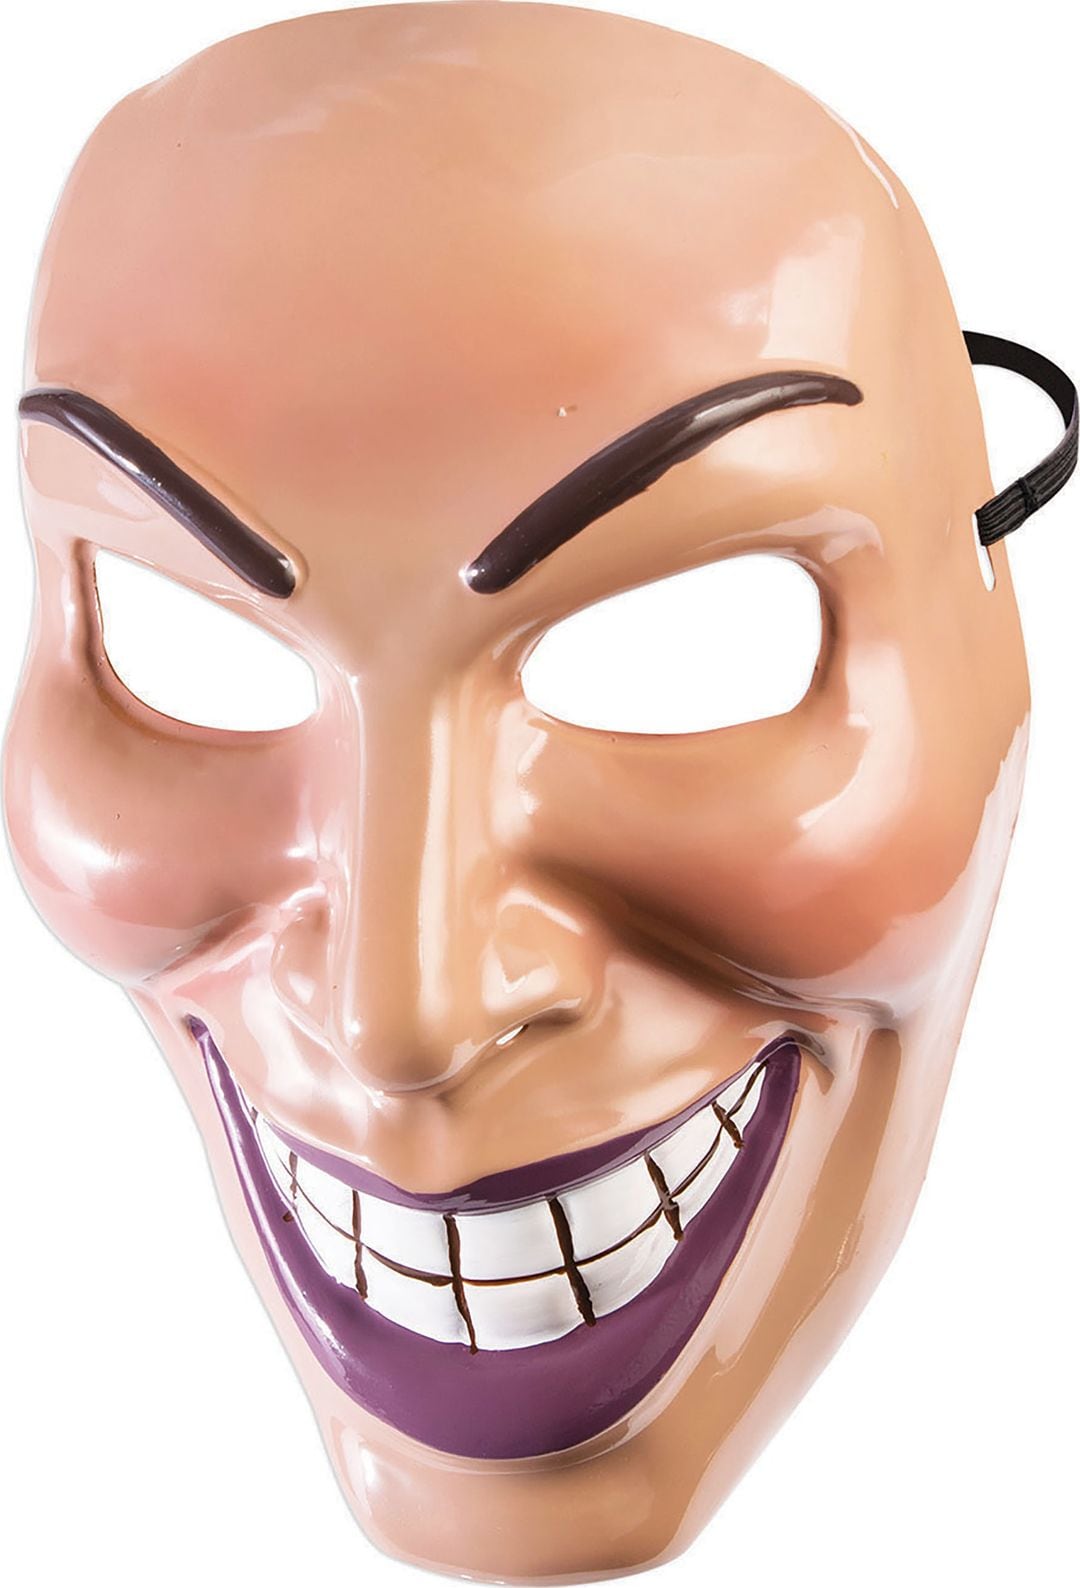 Kwade lachende man masker